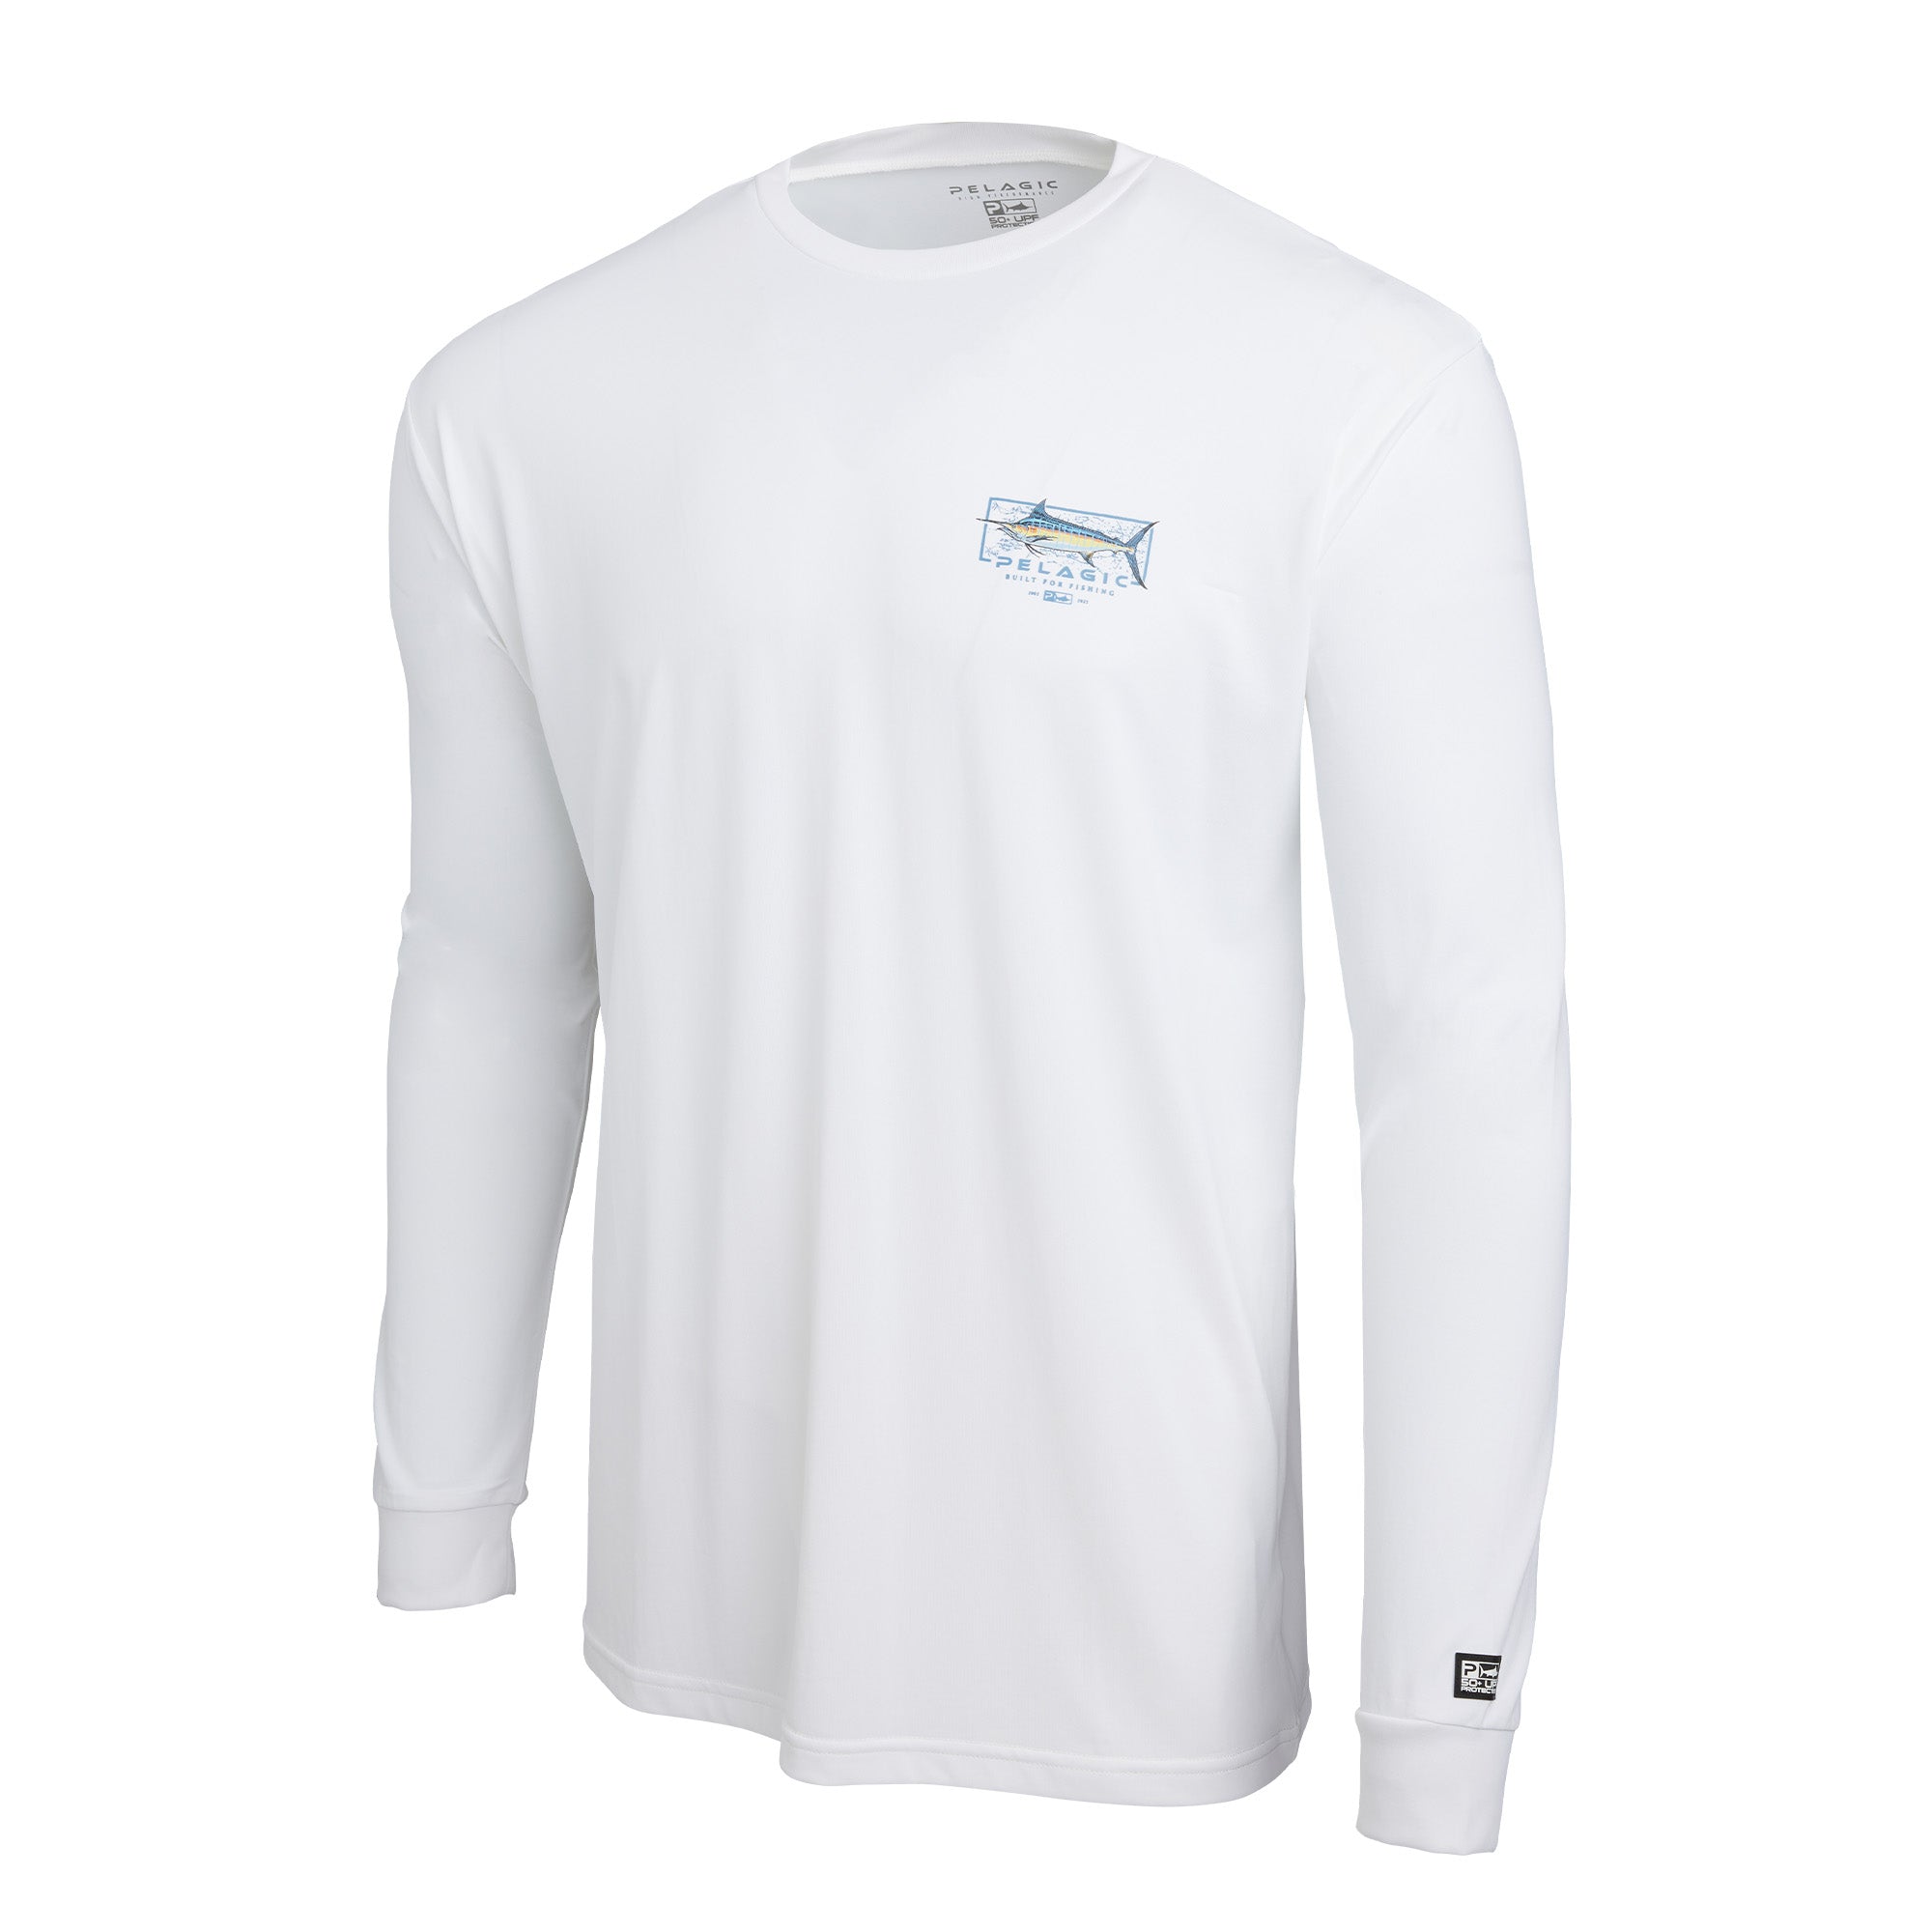 Aquatek Marlin Mind Fishing Shirt